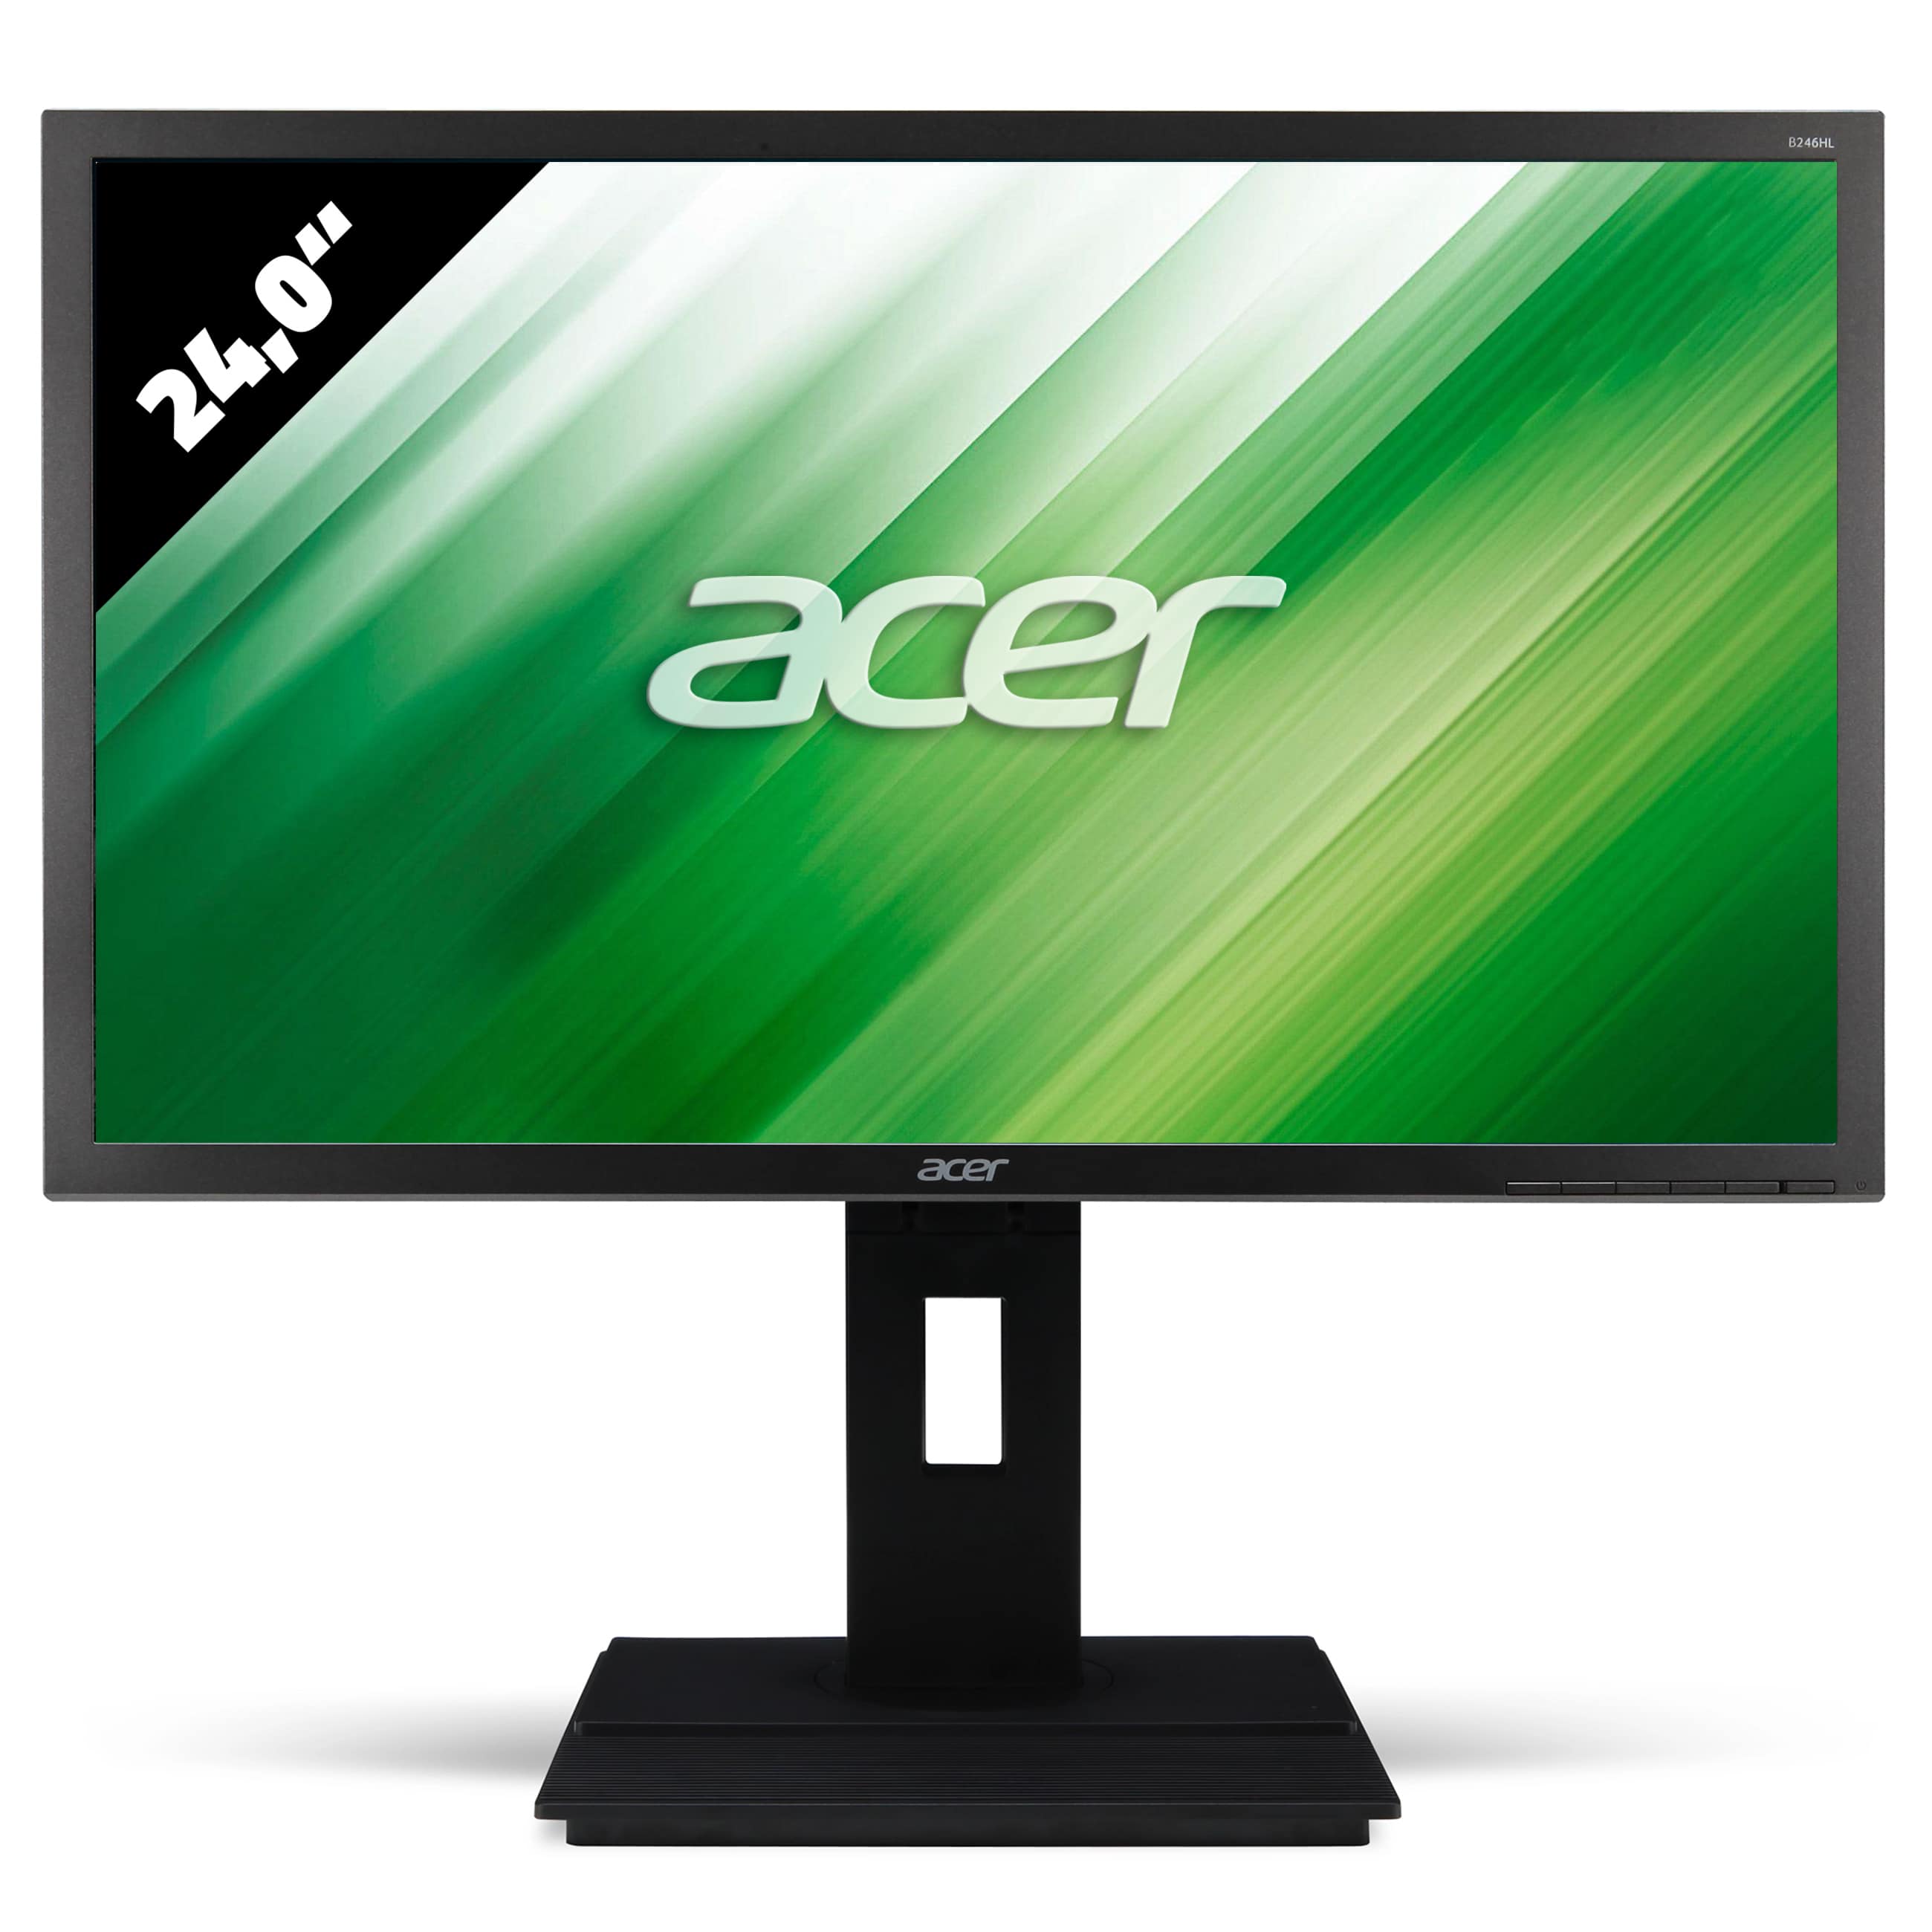 Acer B246HLymdr - 1920 x 1080 - FHD